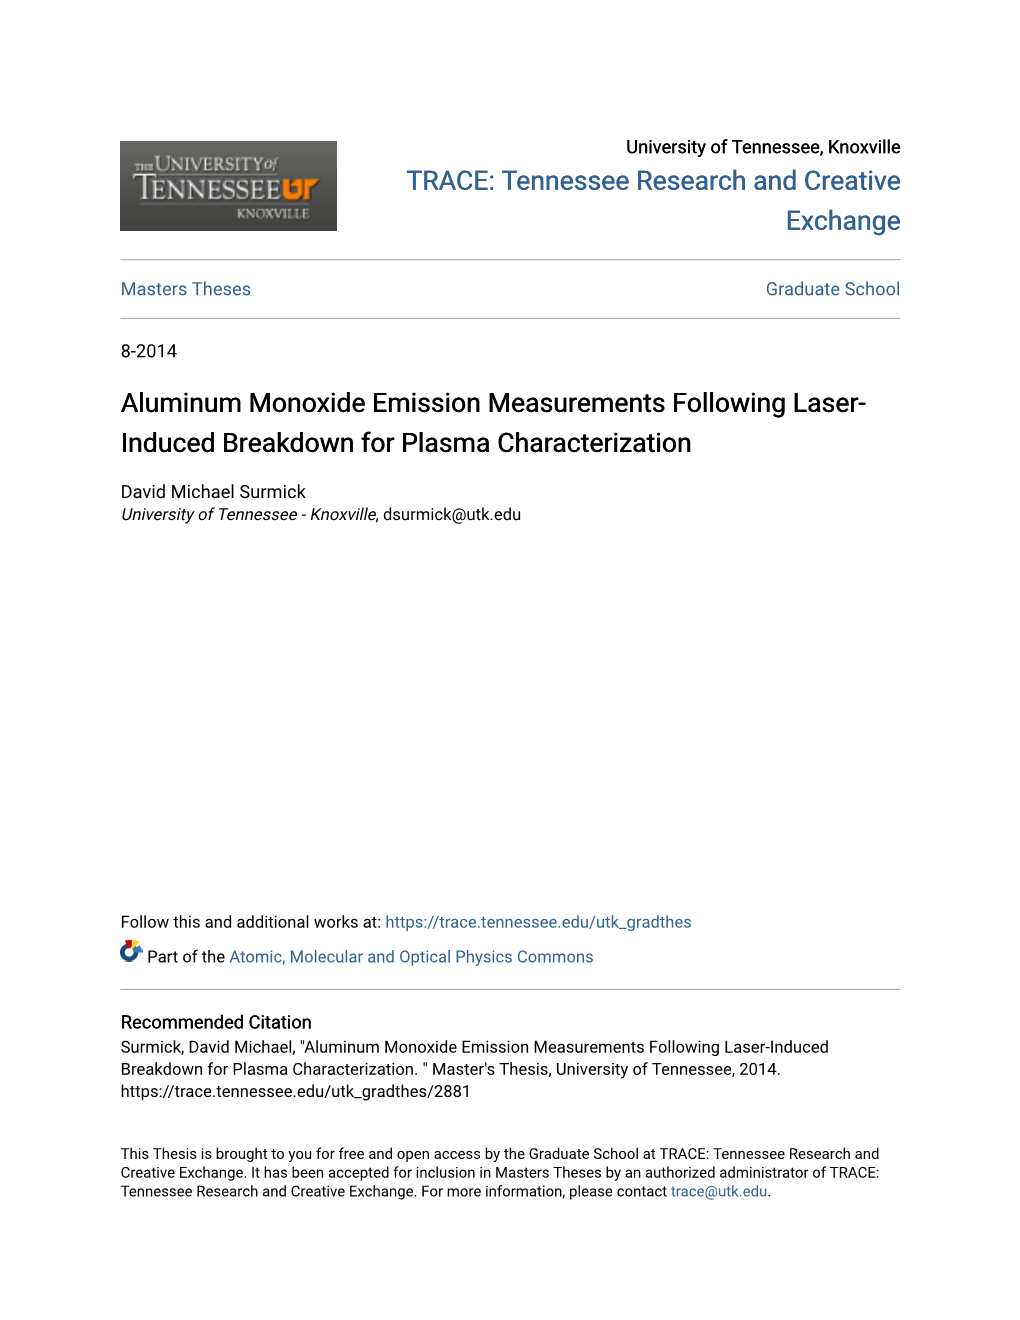 Aluminum Monoxide Emission Measurements Following Laser- Induced Breakdown for Plasma Characterization